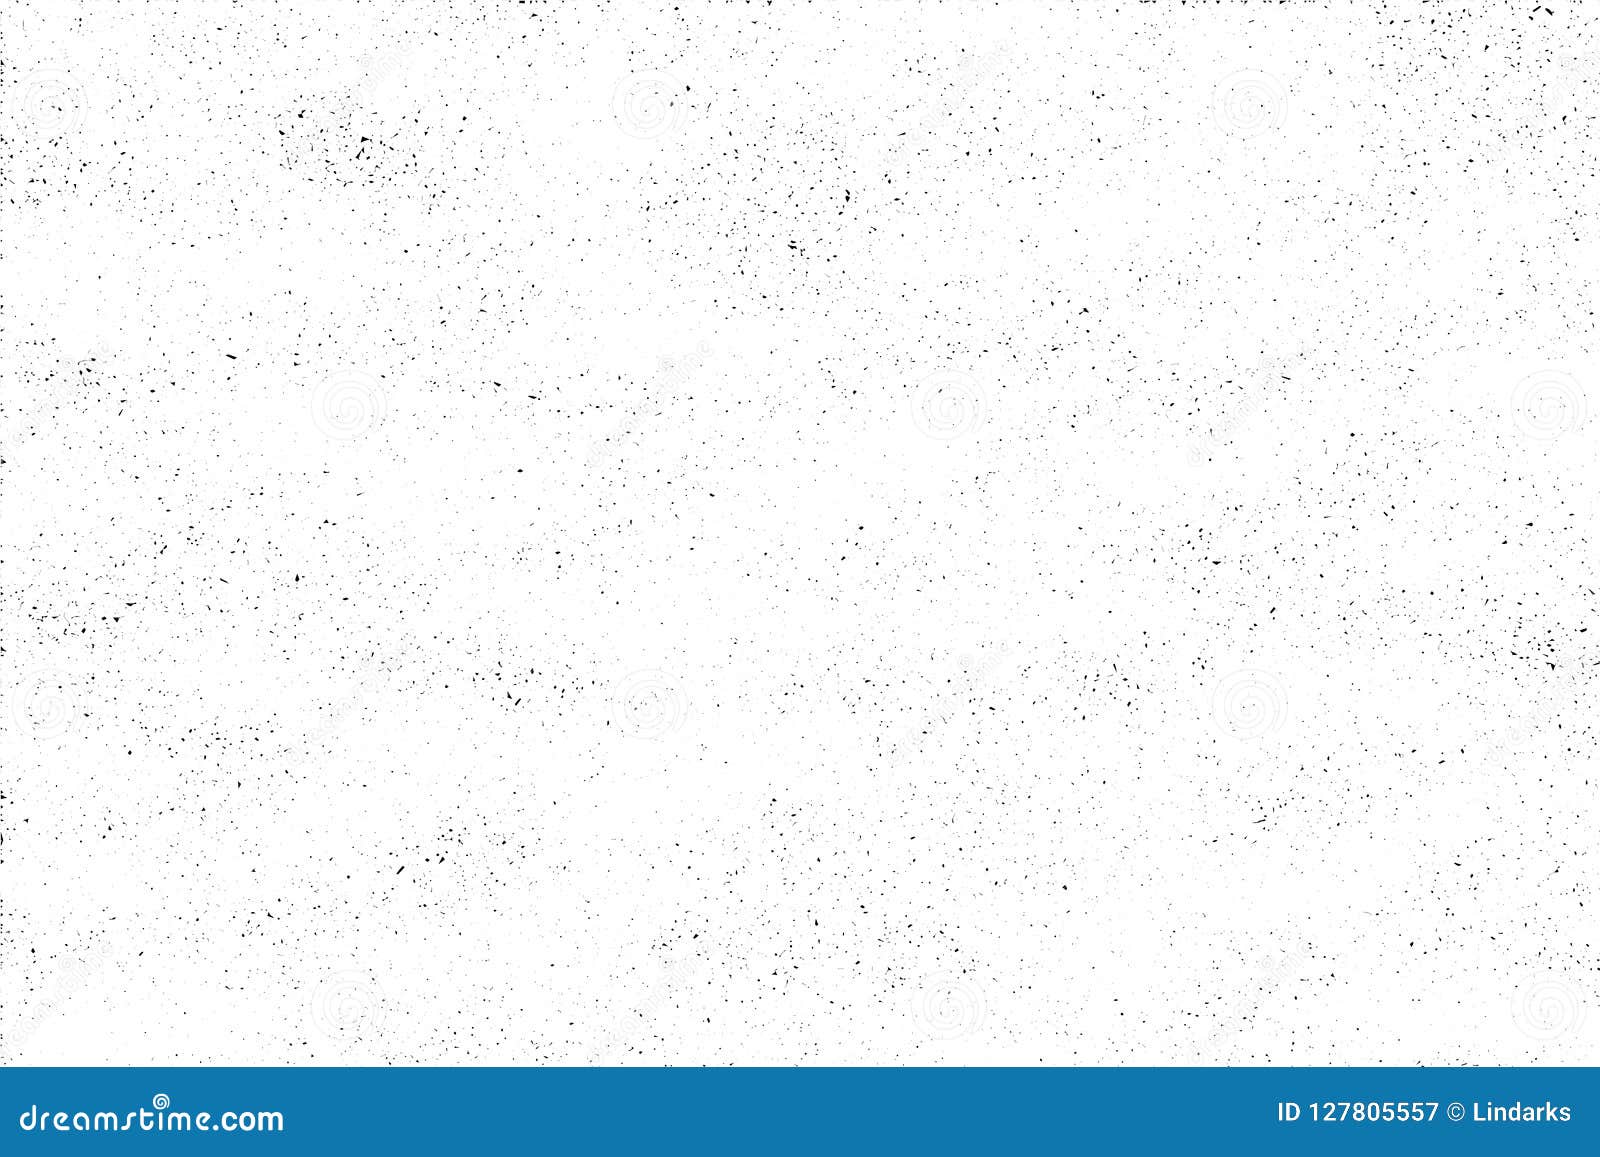 Light Distressed Grunge Urban Overlay Texture Background Stock Vector - Illustration Of Digital, Decorative: 127805557